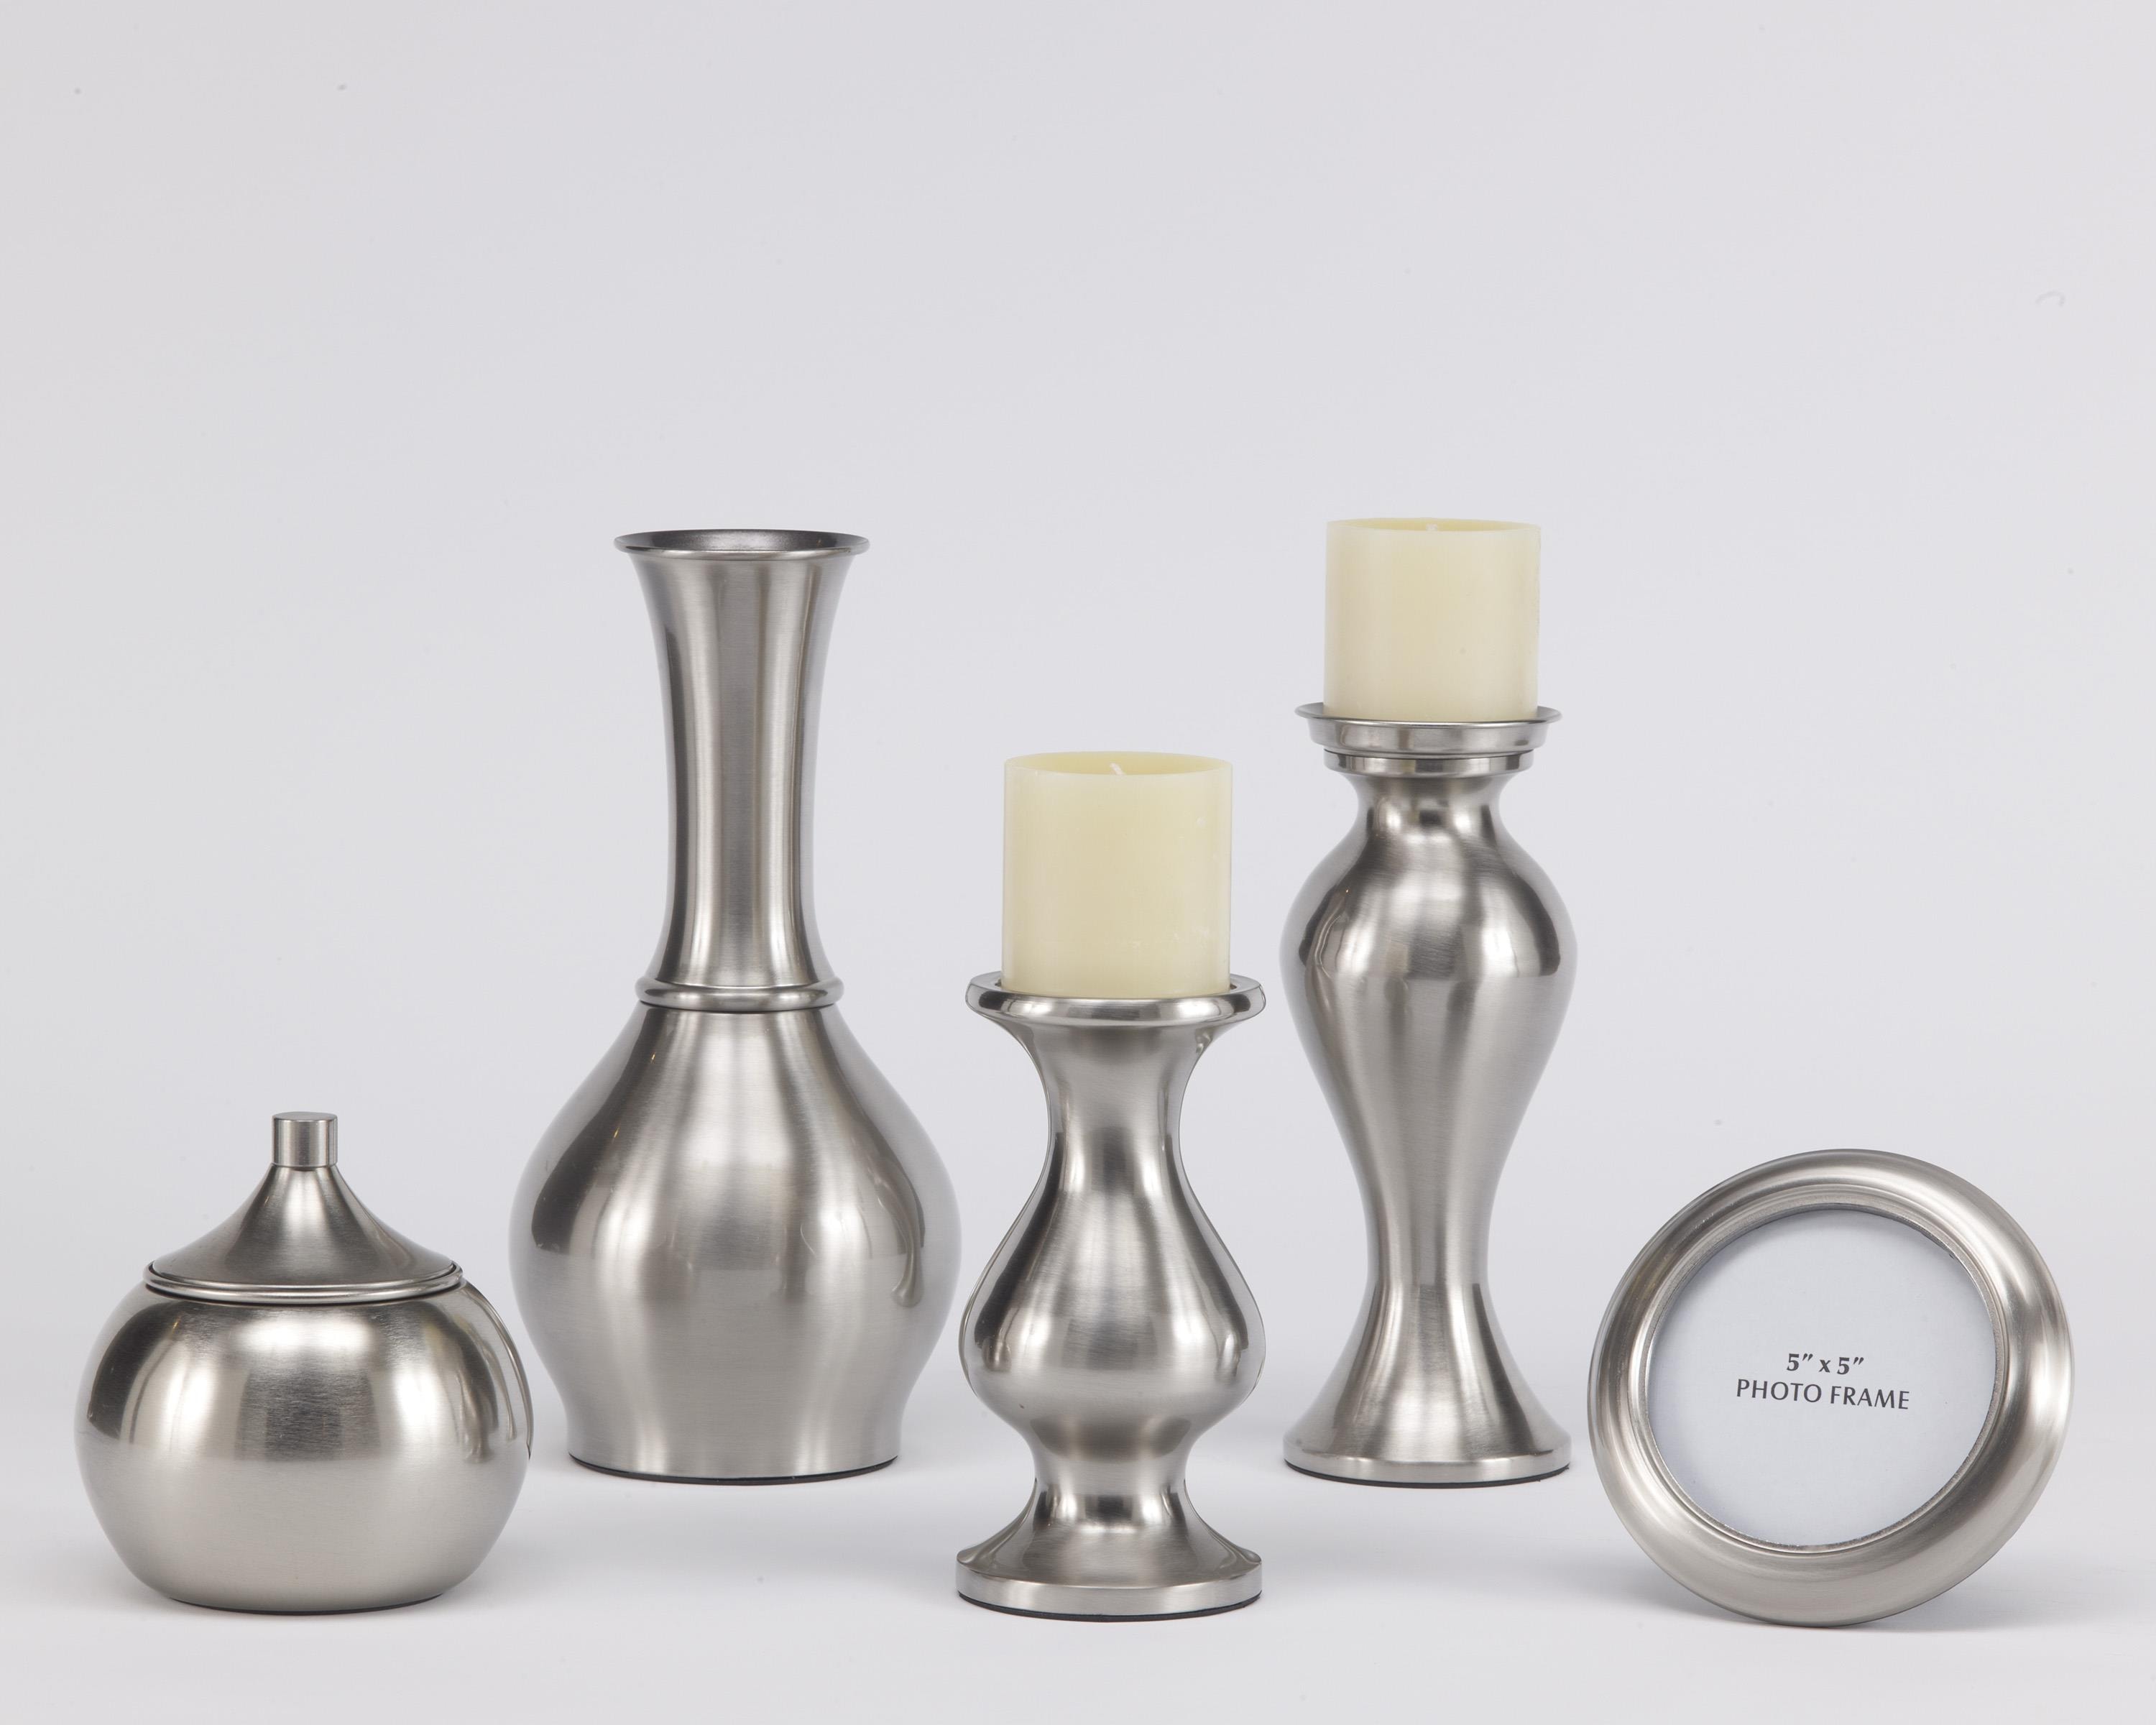 Jar Photo Frame & Candle Holders Silver Finish Signature Design by Ashley Rishona 5 Piece Décor Set with Vase 